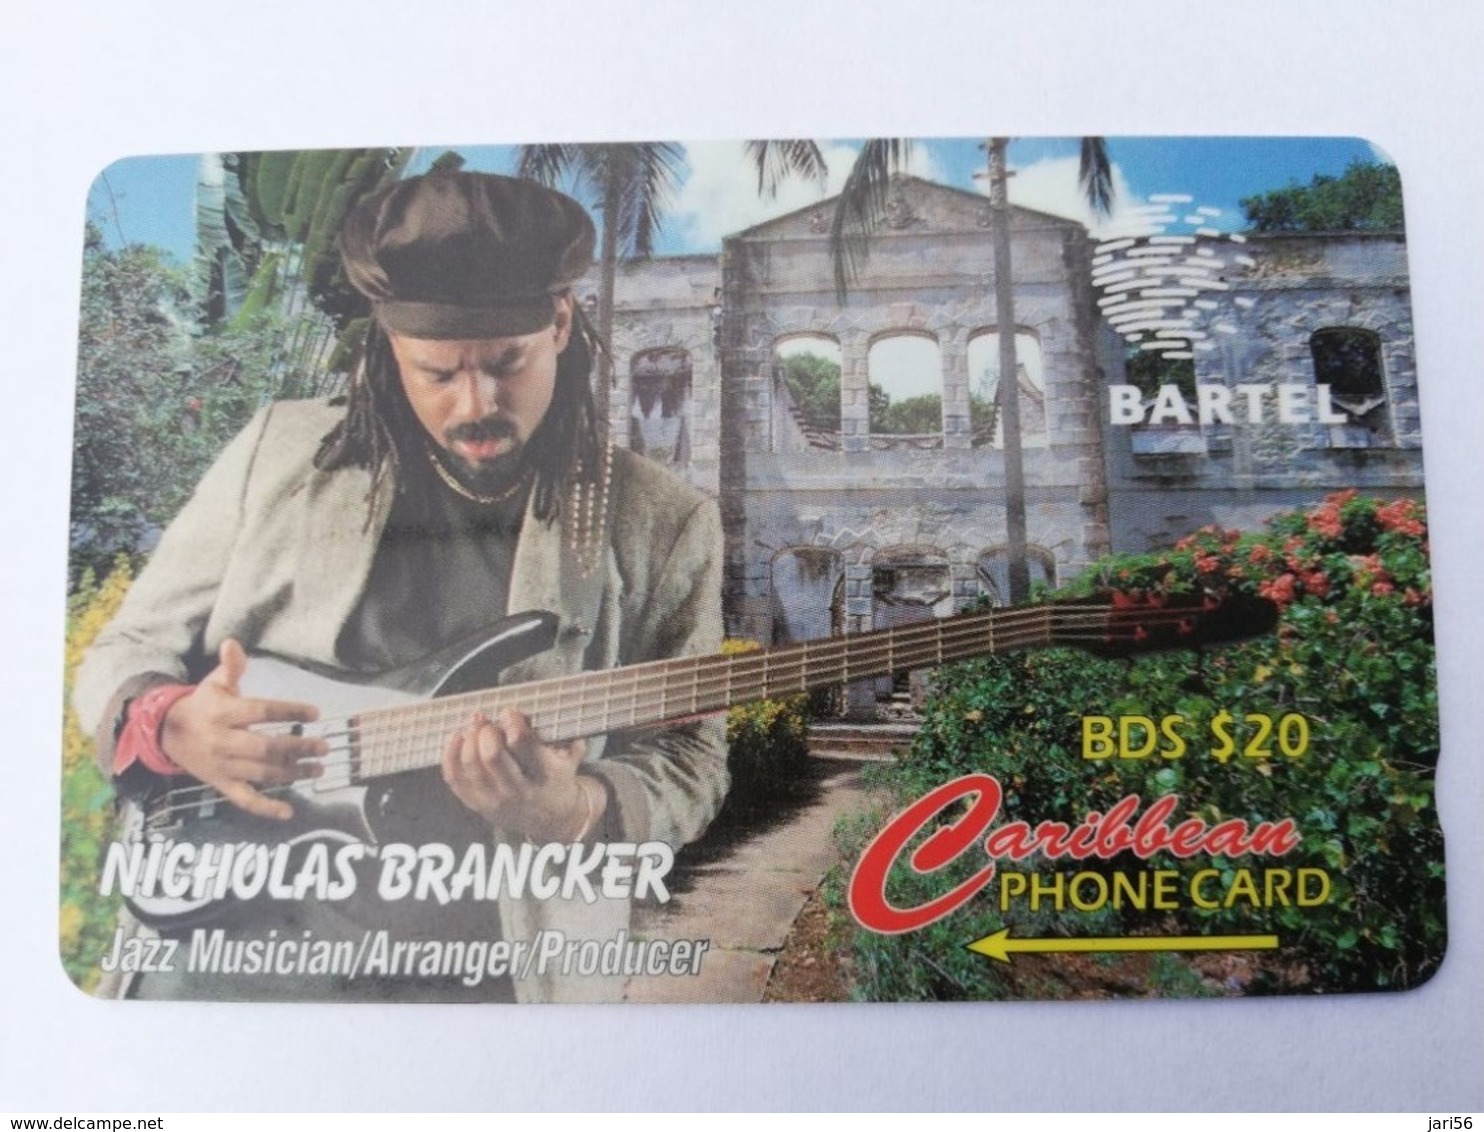 BARBADOS   $20-  Gpt Magnetic     BAR-125D  12CBDD  NICHOLAS BRANCKER   NEW  LOGO   Very Fine Used  Card  ** 2908** - Barbades